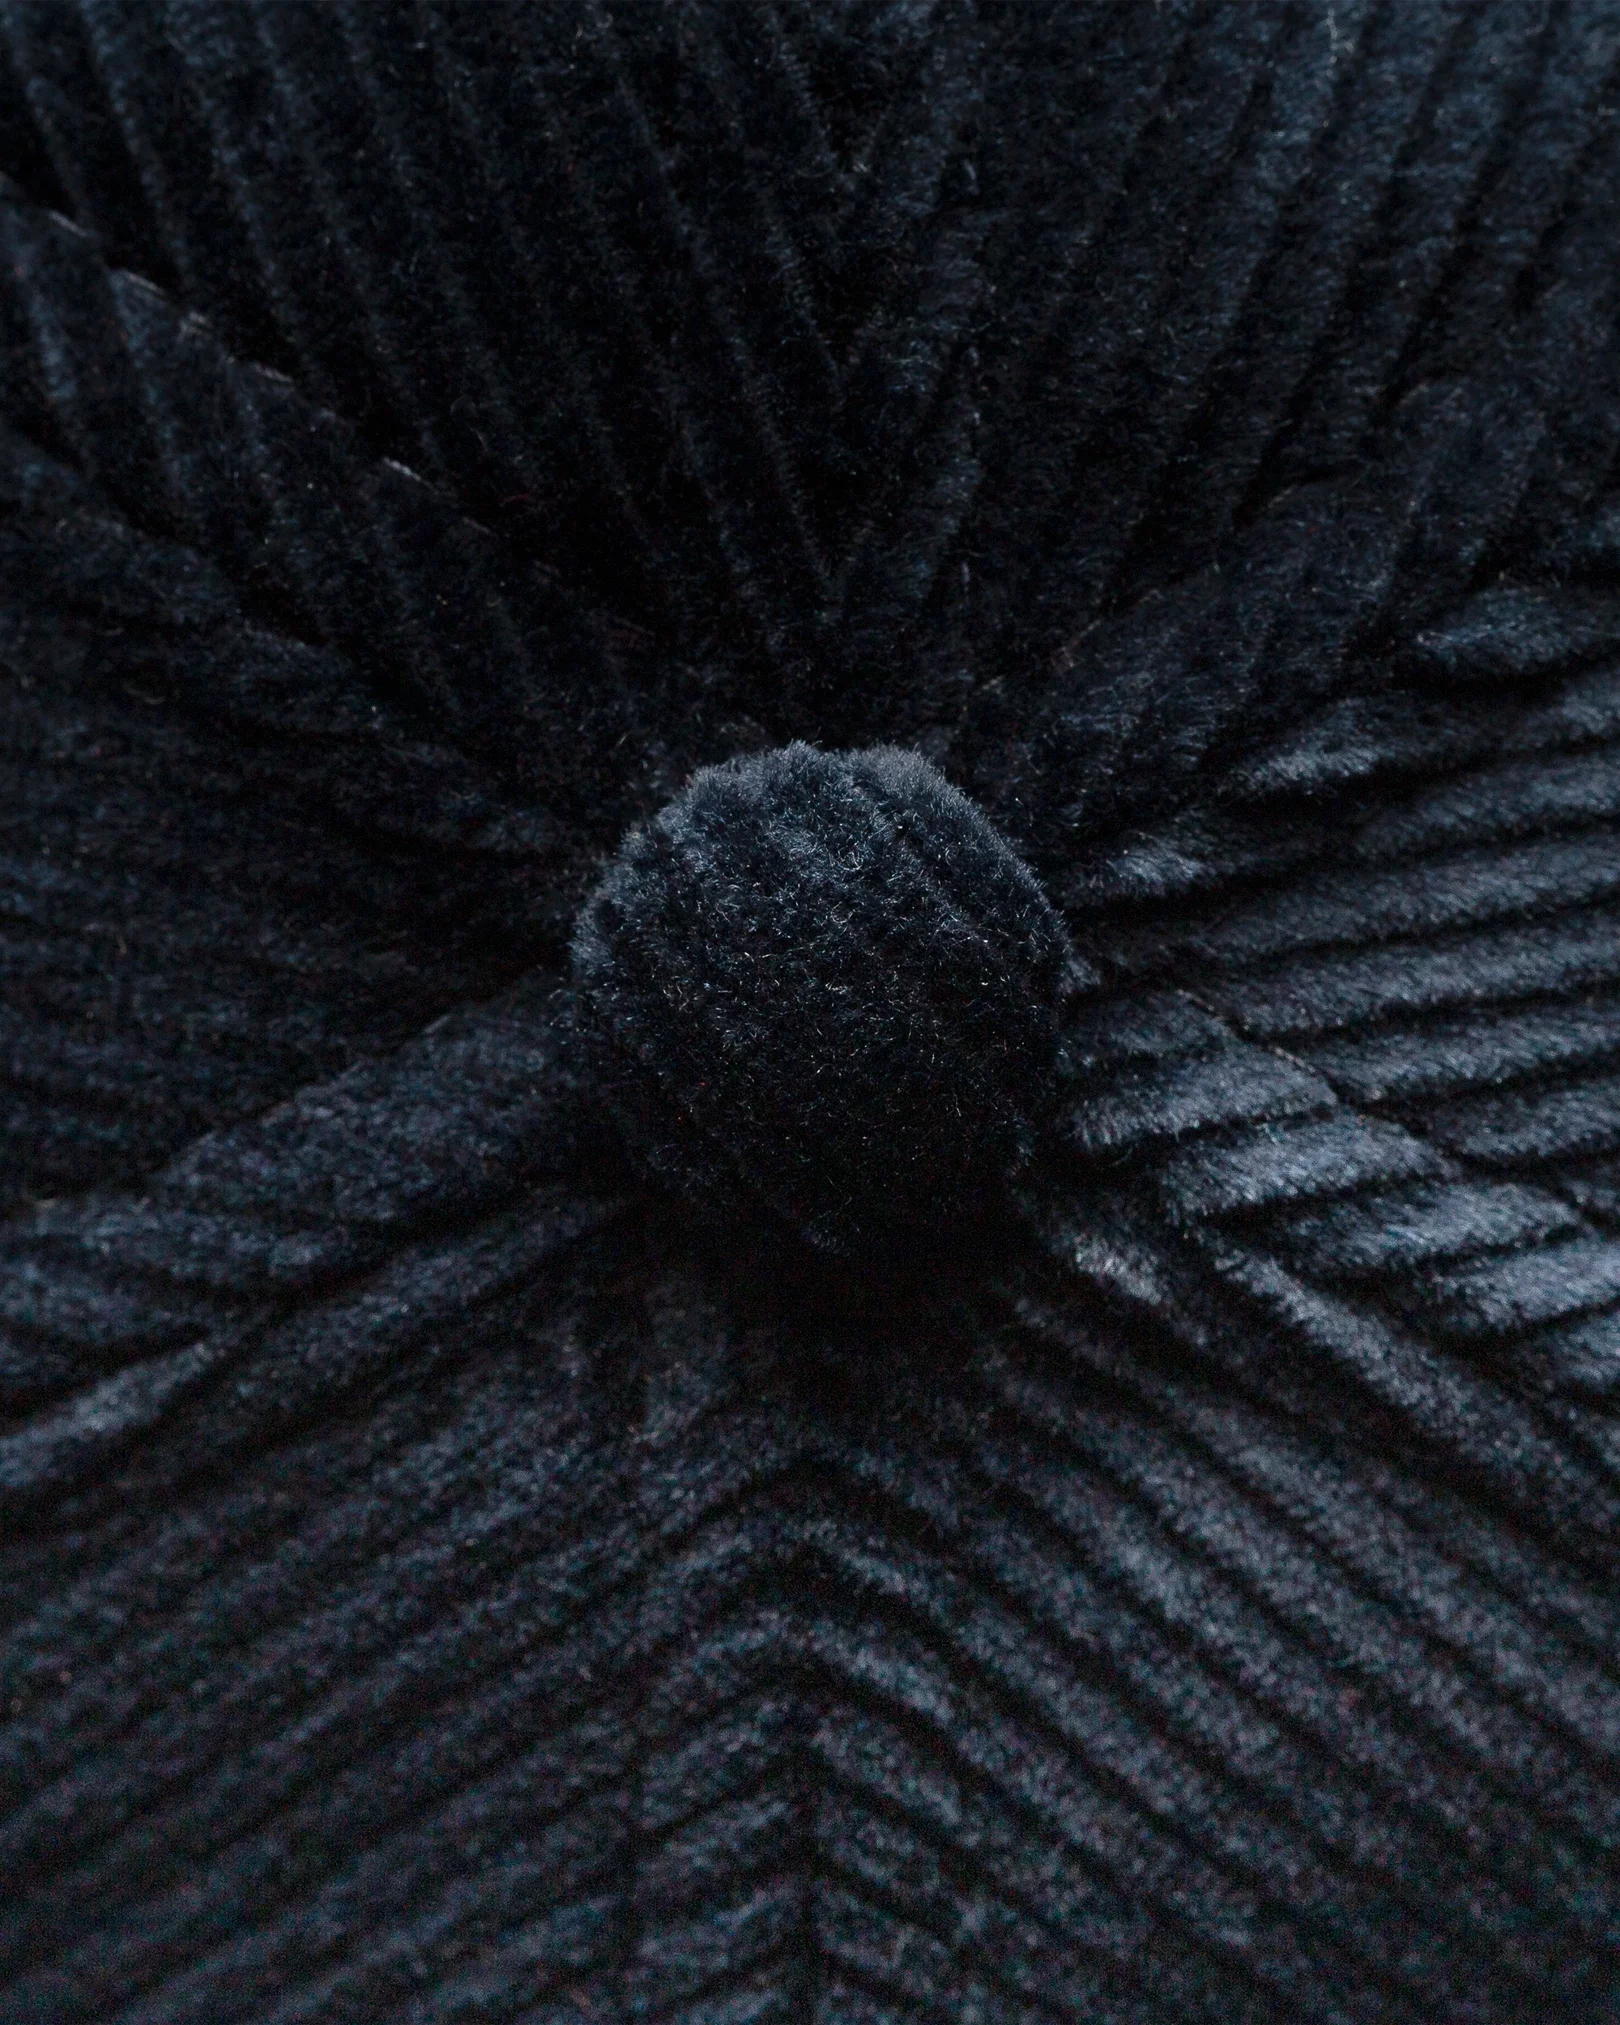 Eton - dark blue corduroy baseball cap